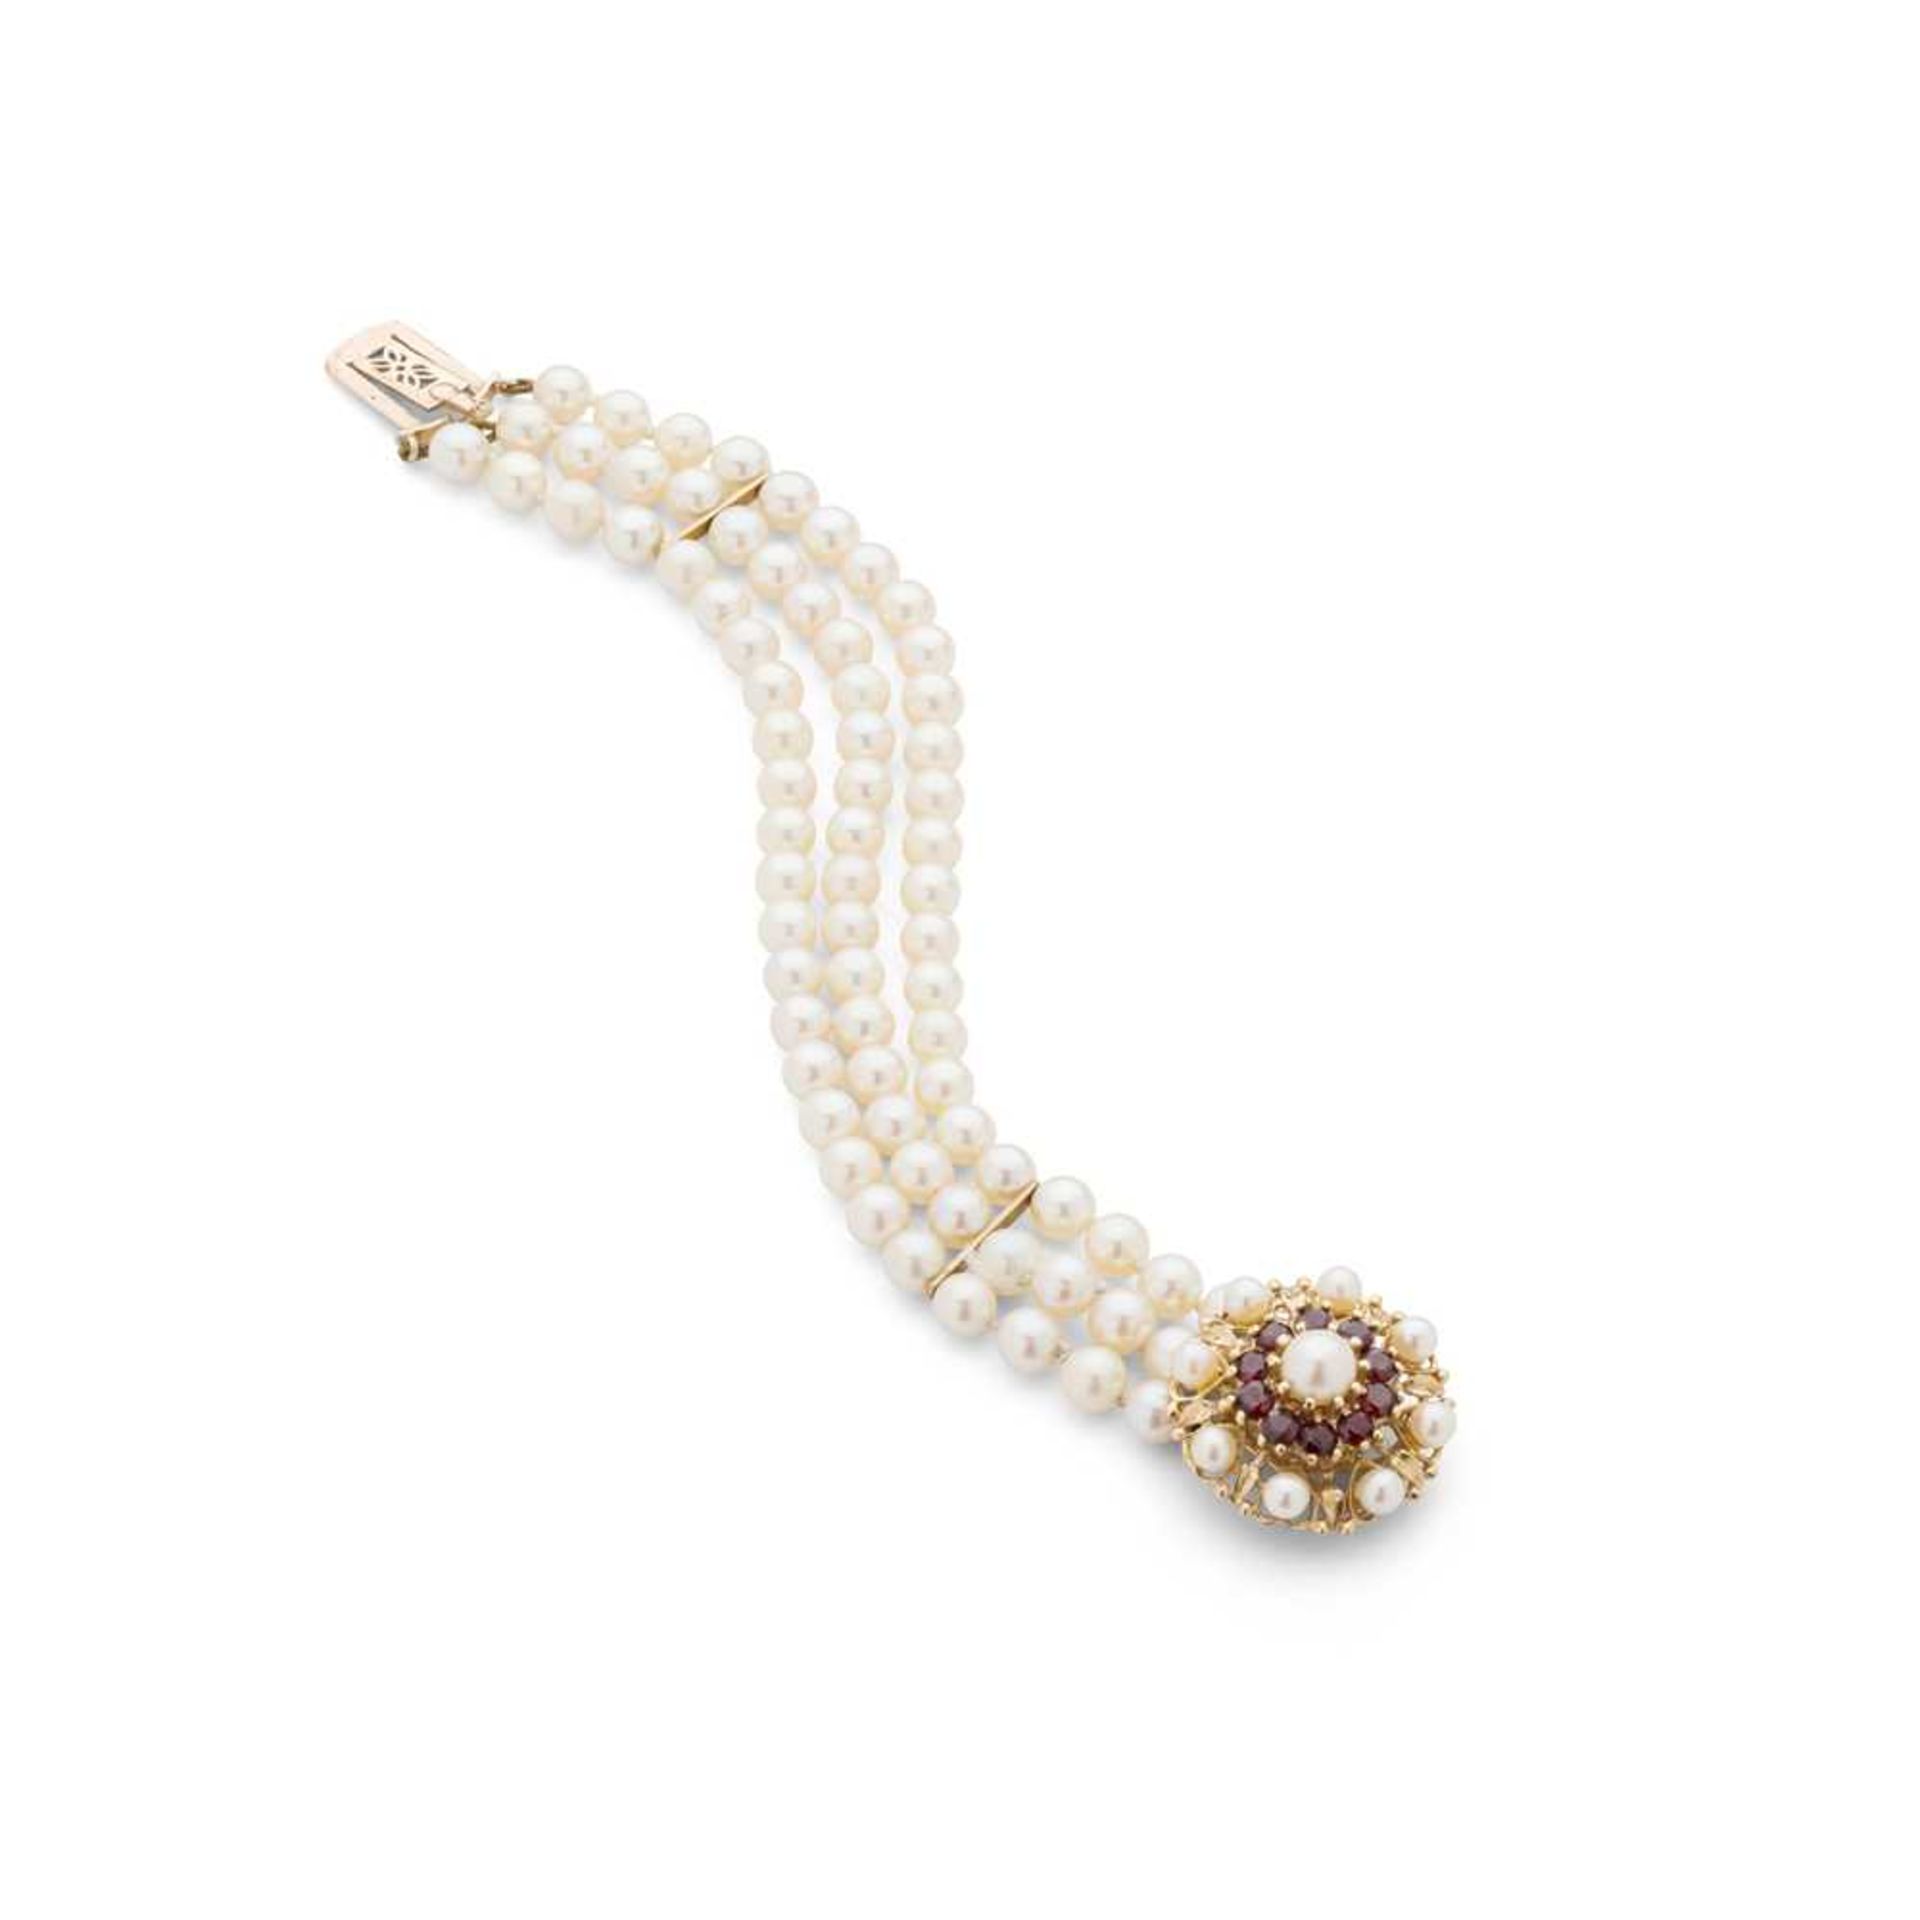 A cultured pearl and garnet bracelet